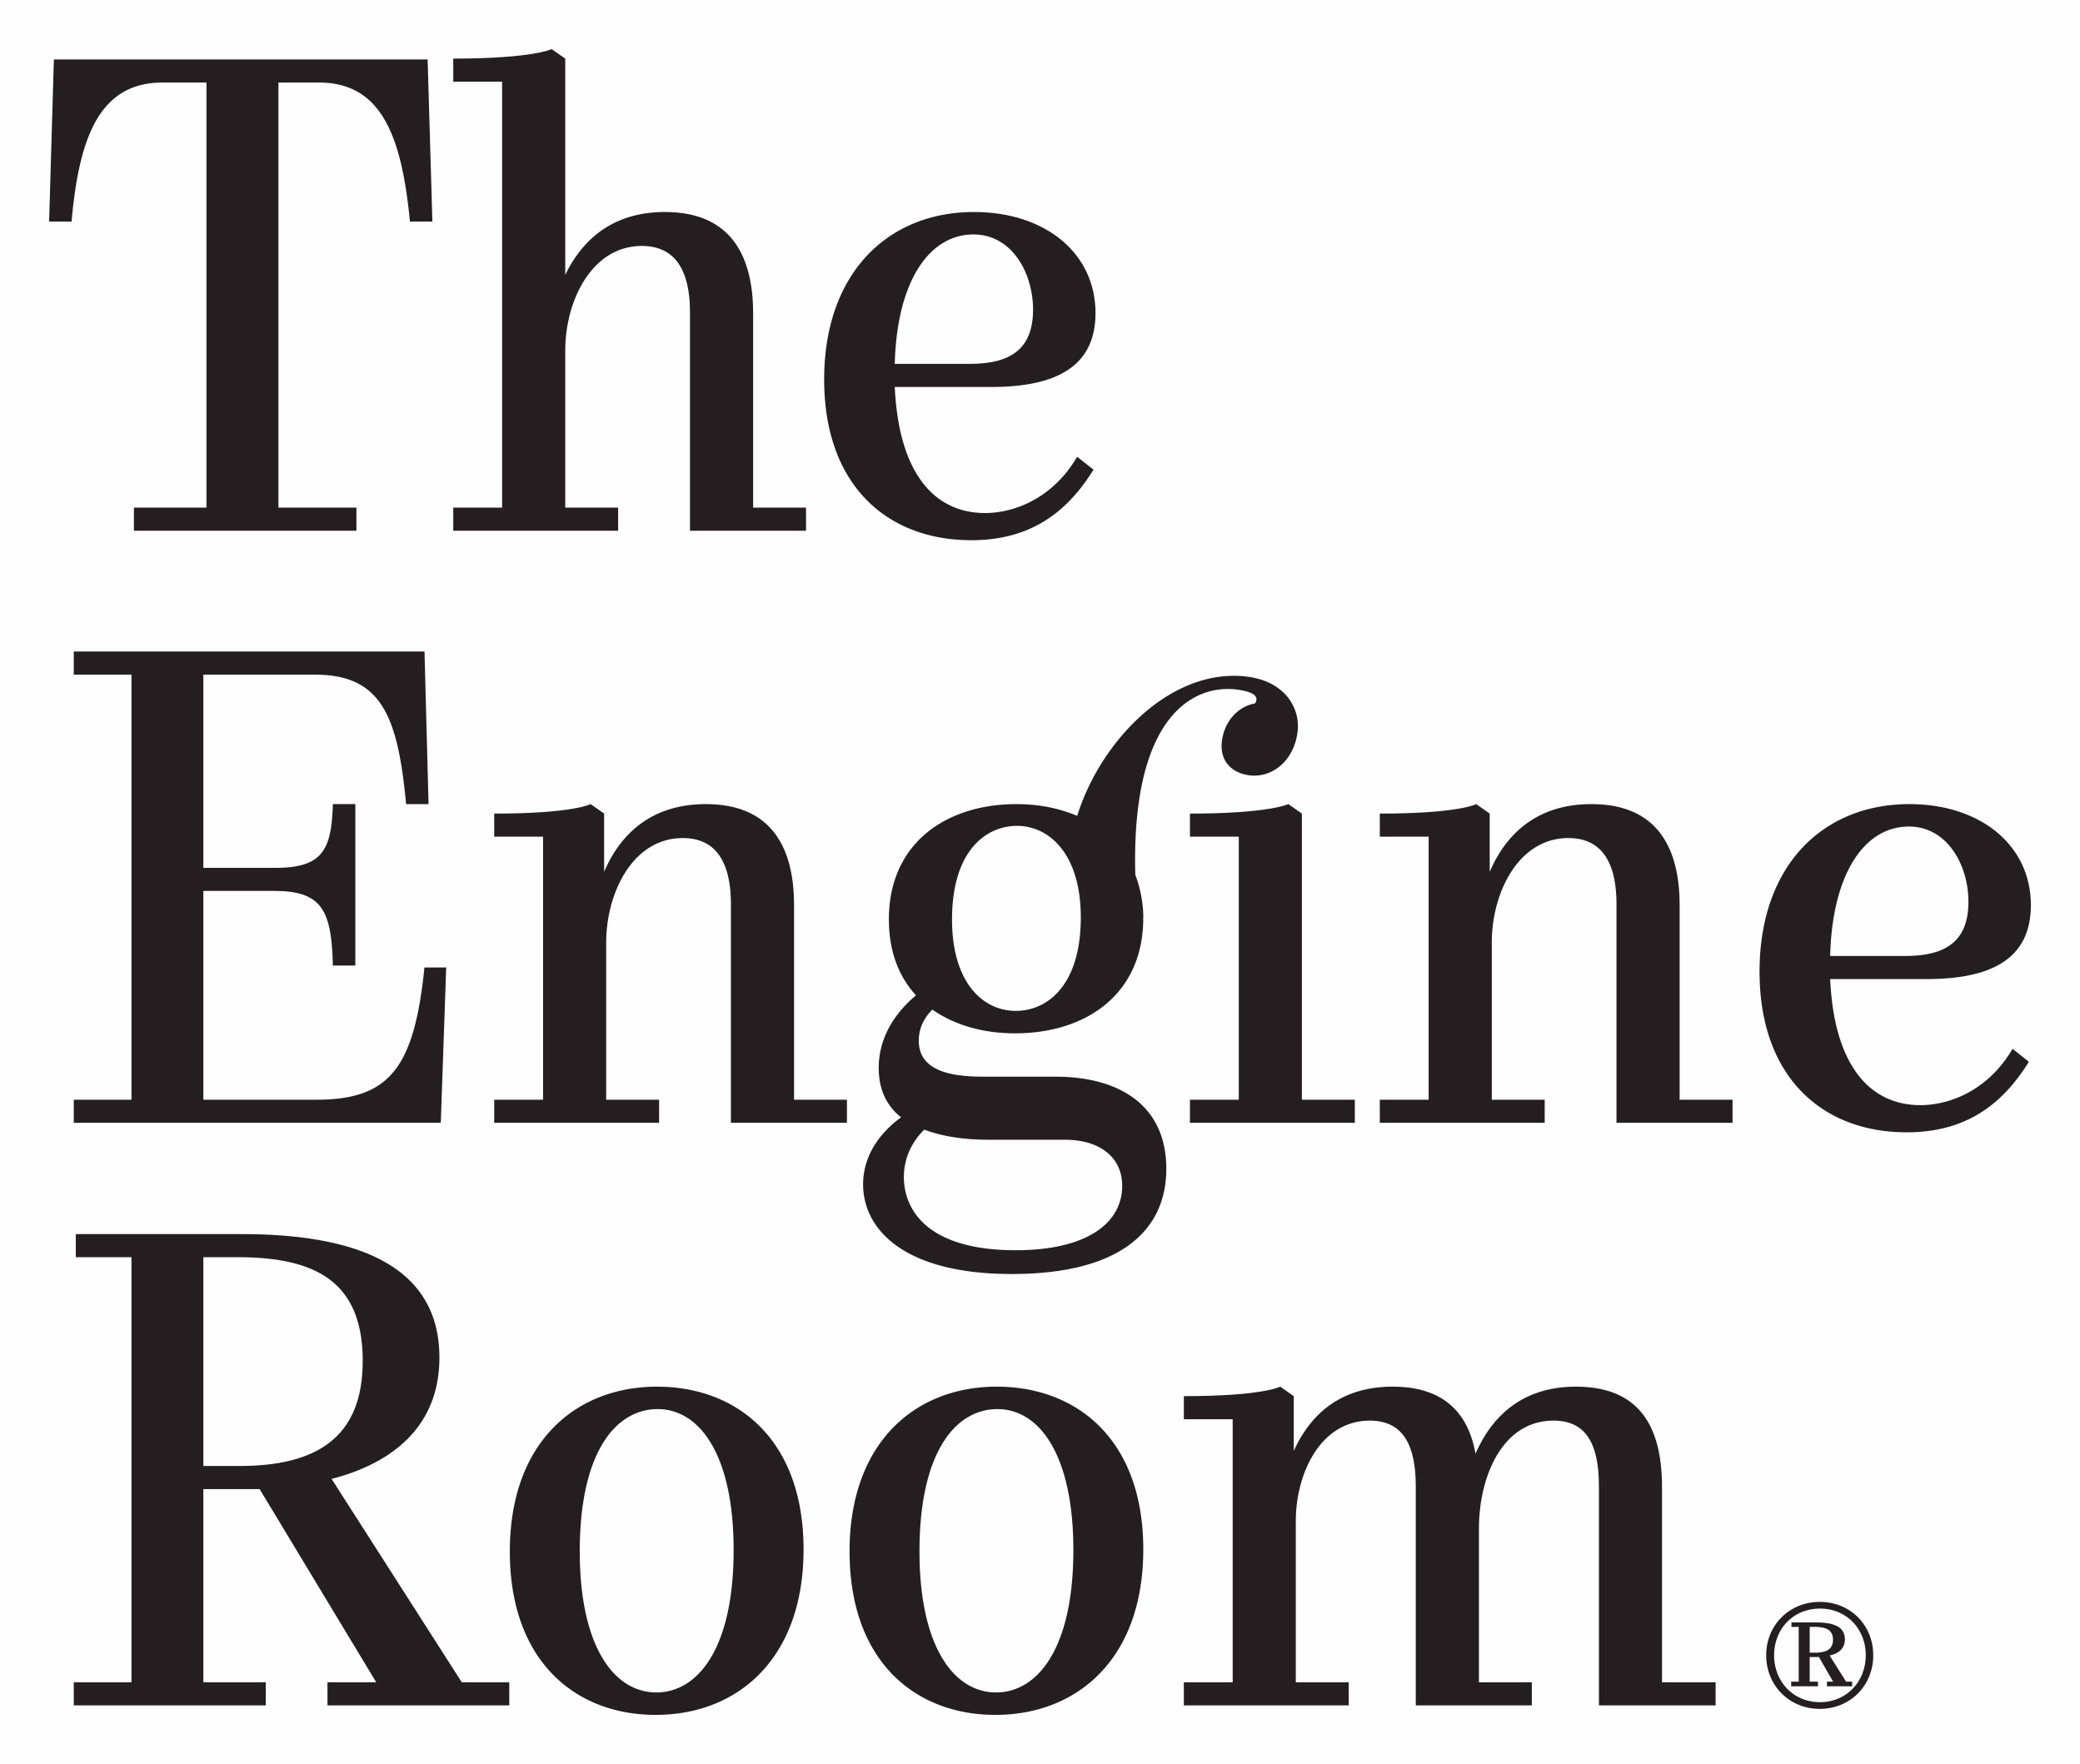 Engine Room Design